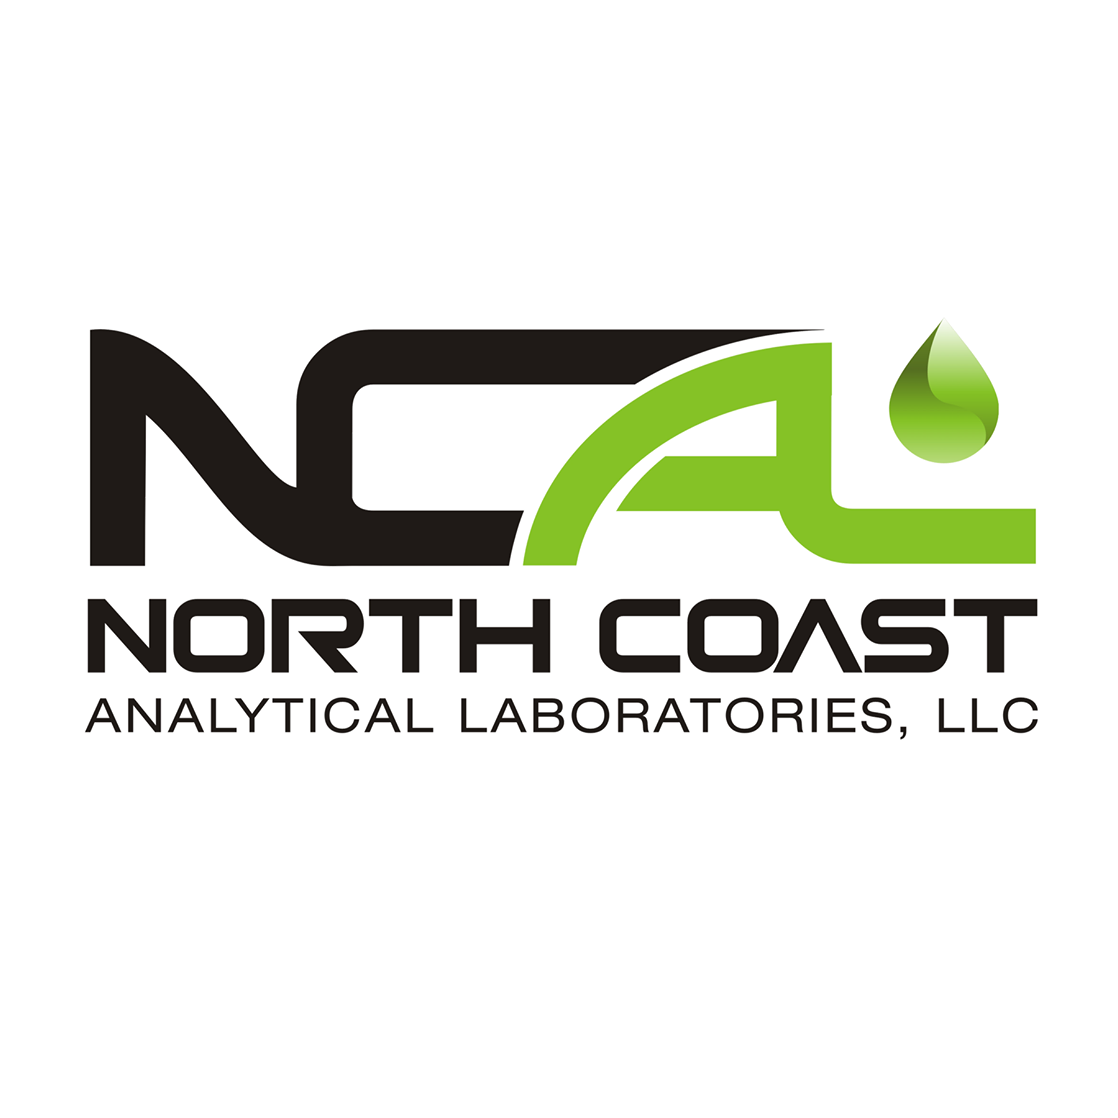 North Coast Analytical Laboratories